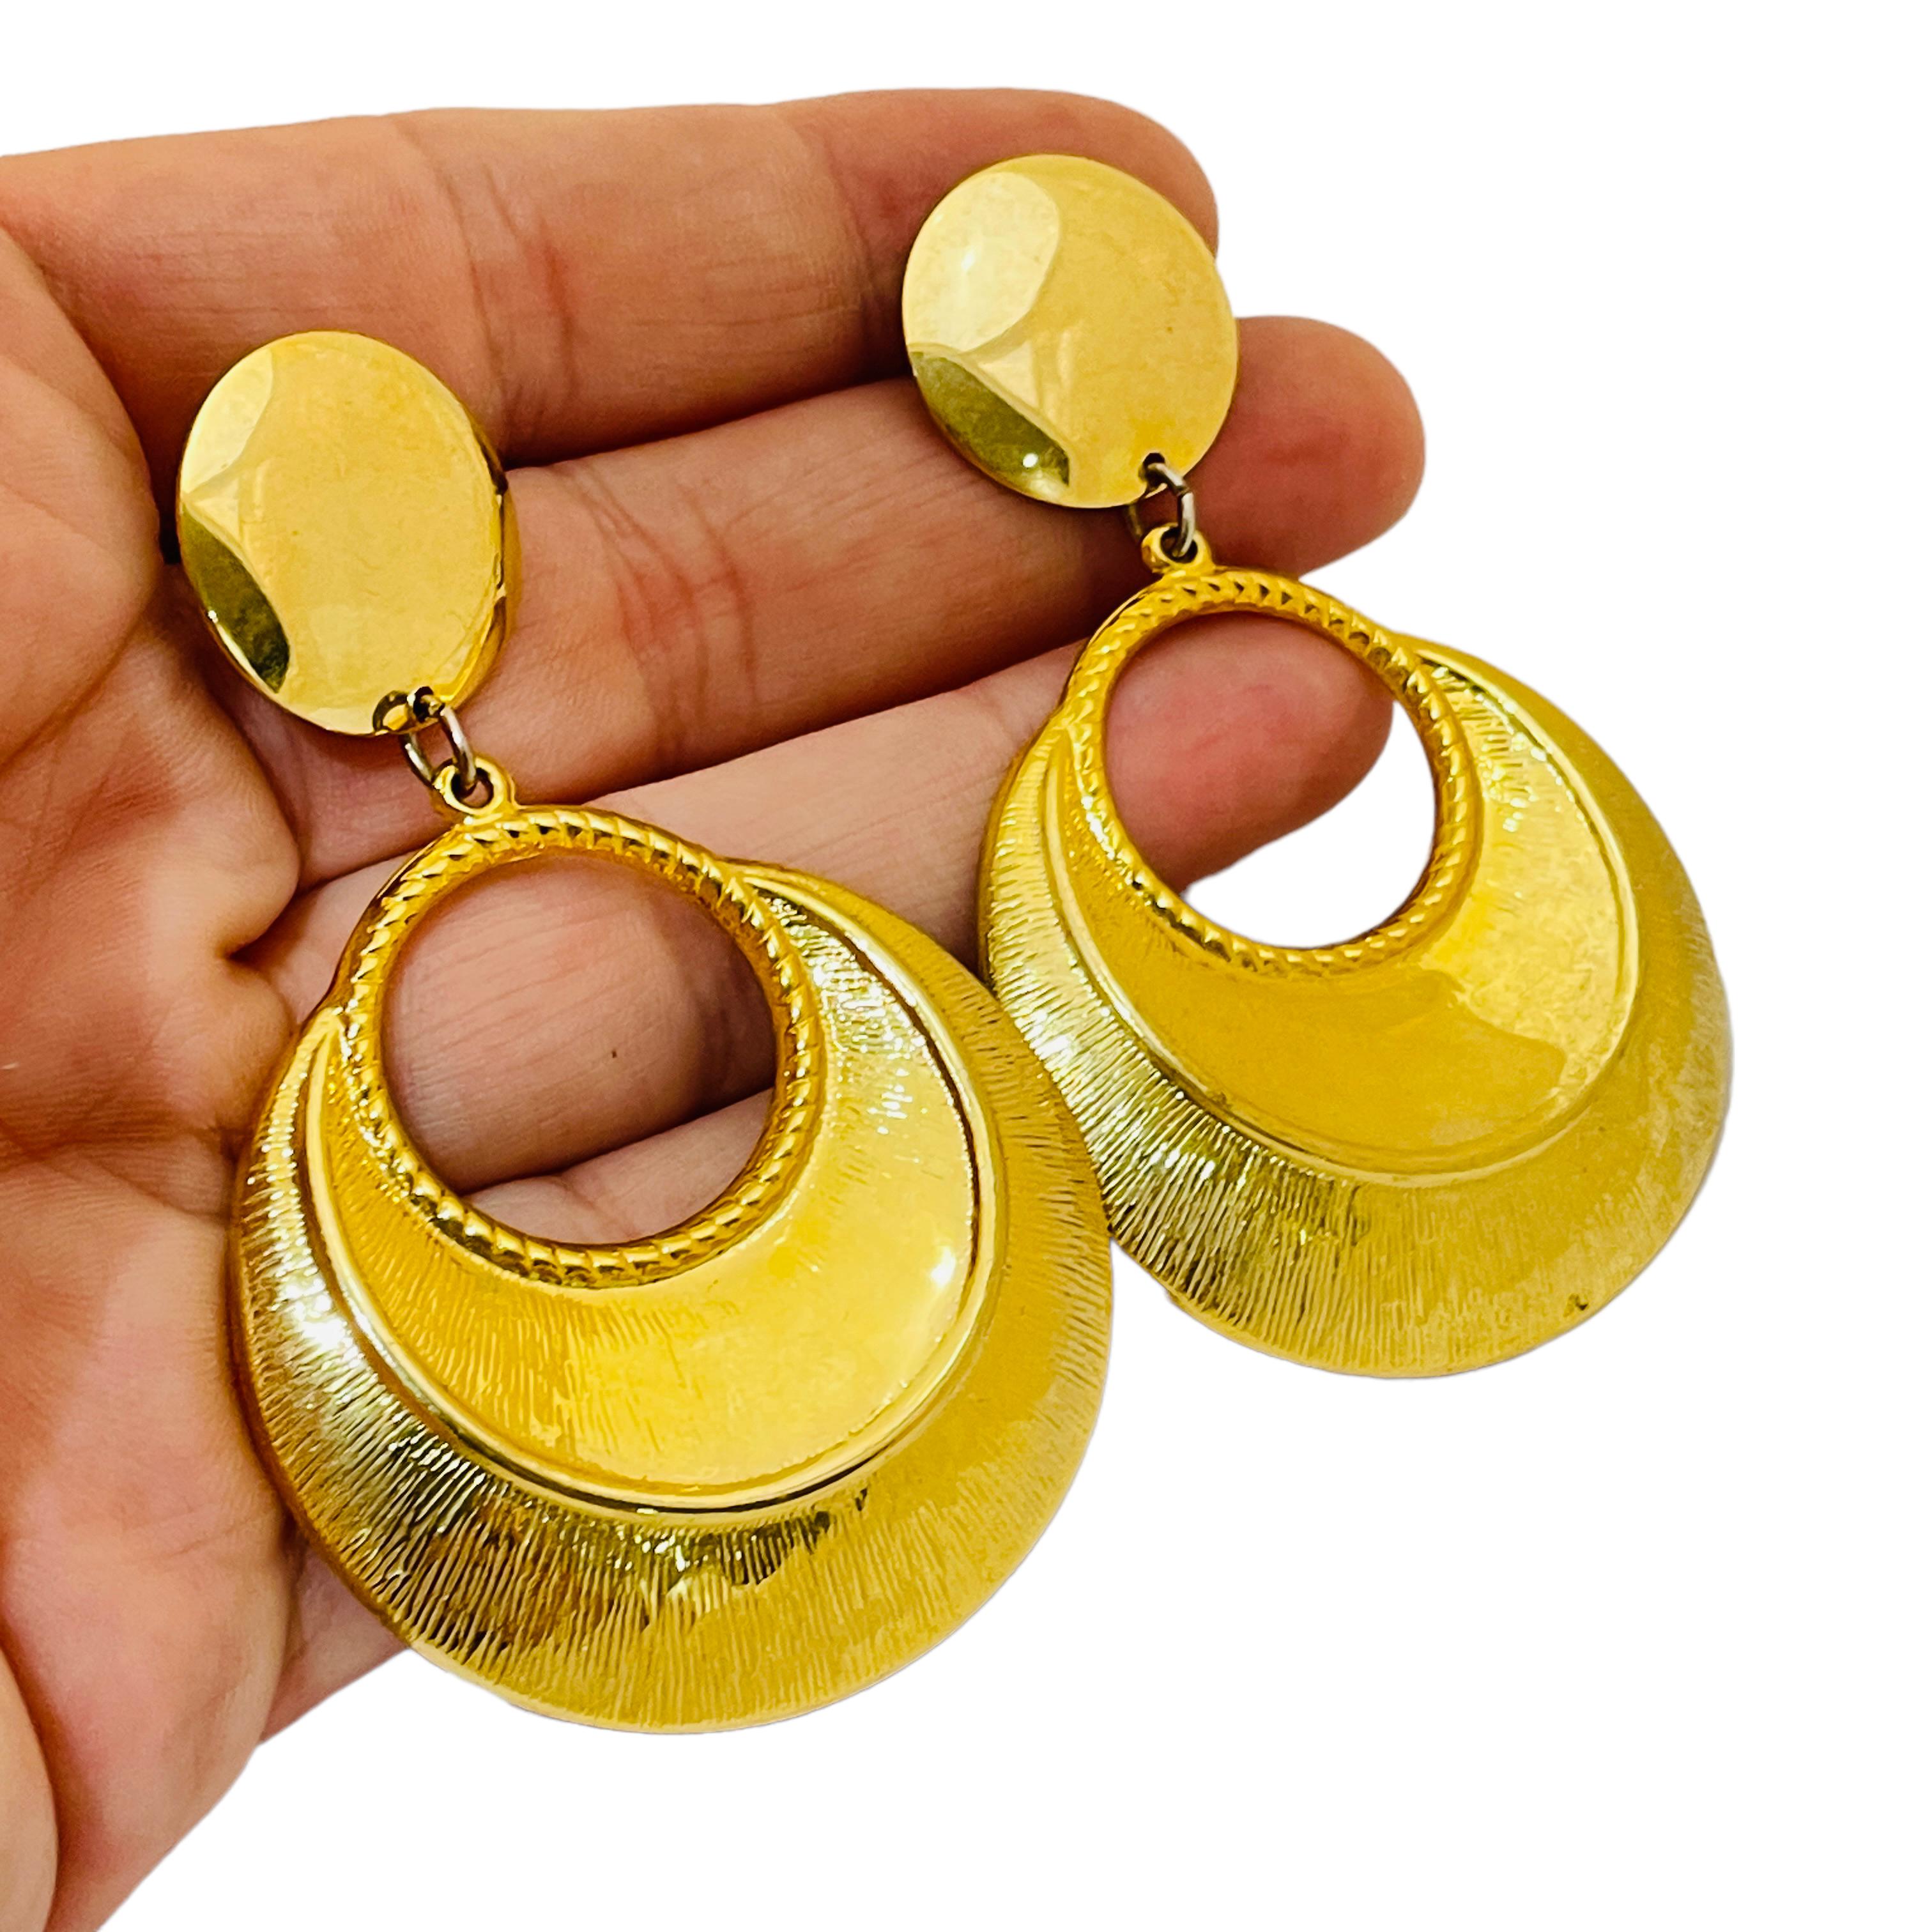 DETAILS

• unsigned 

• gold tone  

• vintage designer pierced earrings

MEASUREMENTS

• 2.63